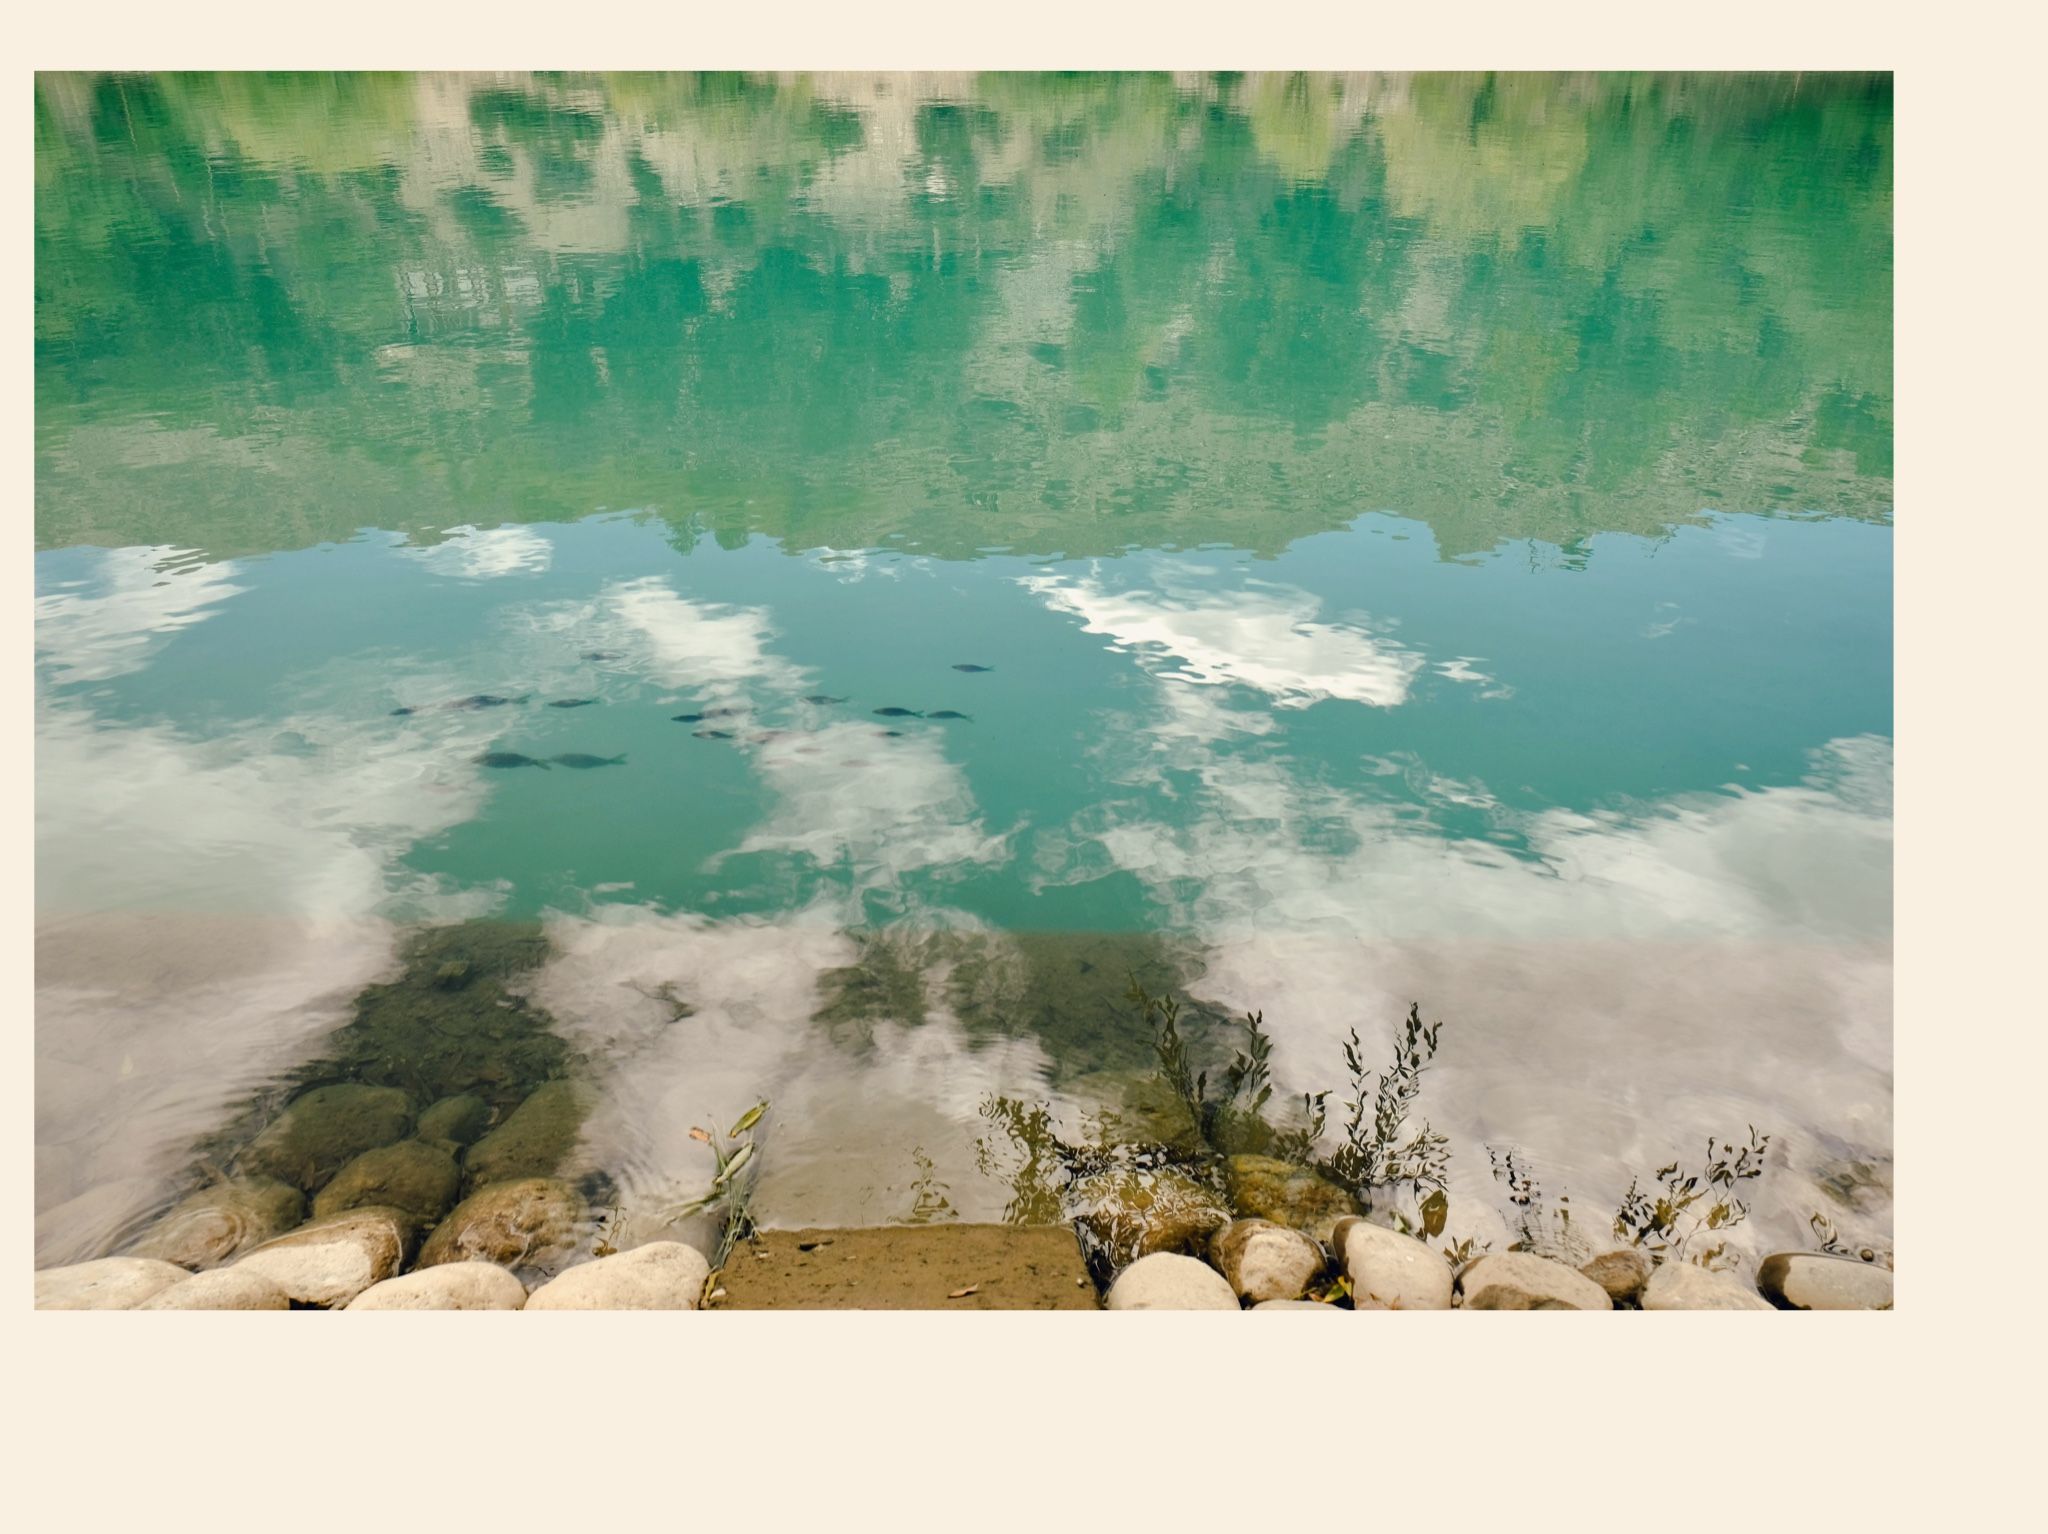 Nako lake in the Nako village, Kinnaur, Himachal Pradesh, India. September 2022.